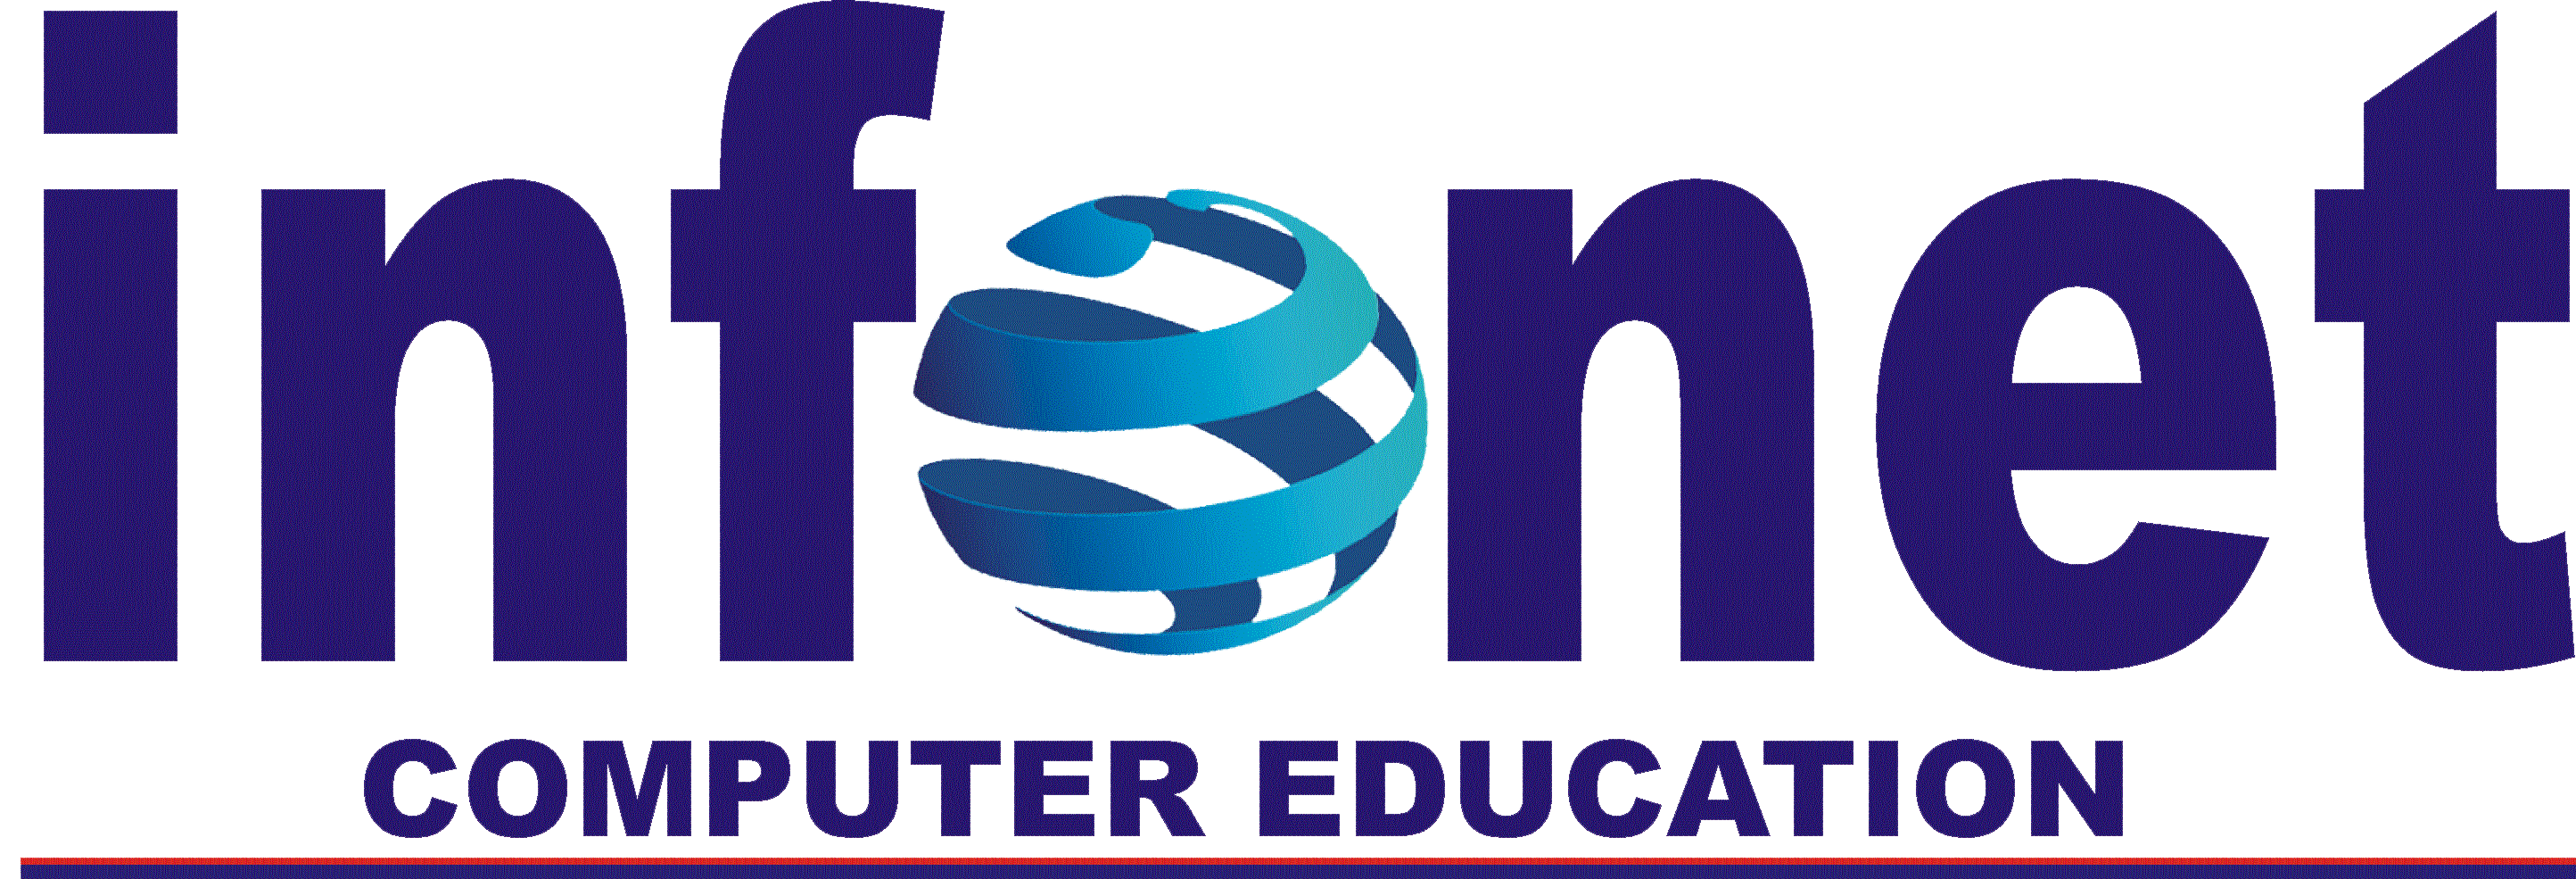 Infonet Logo